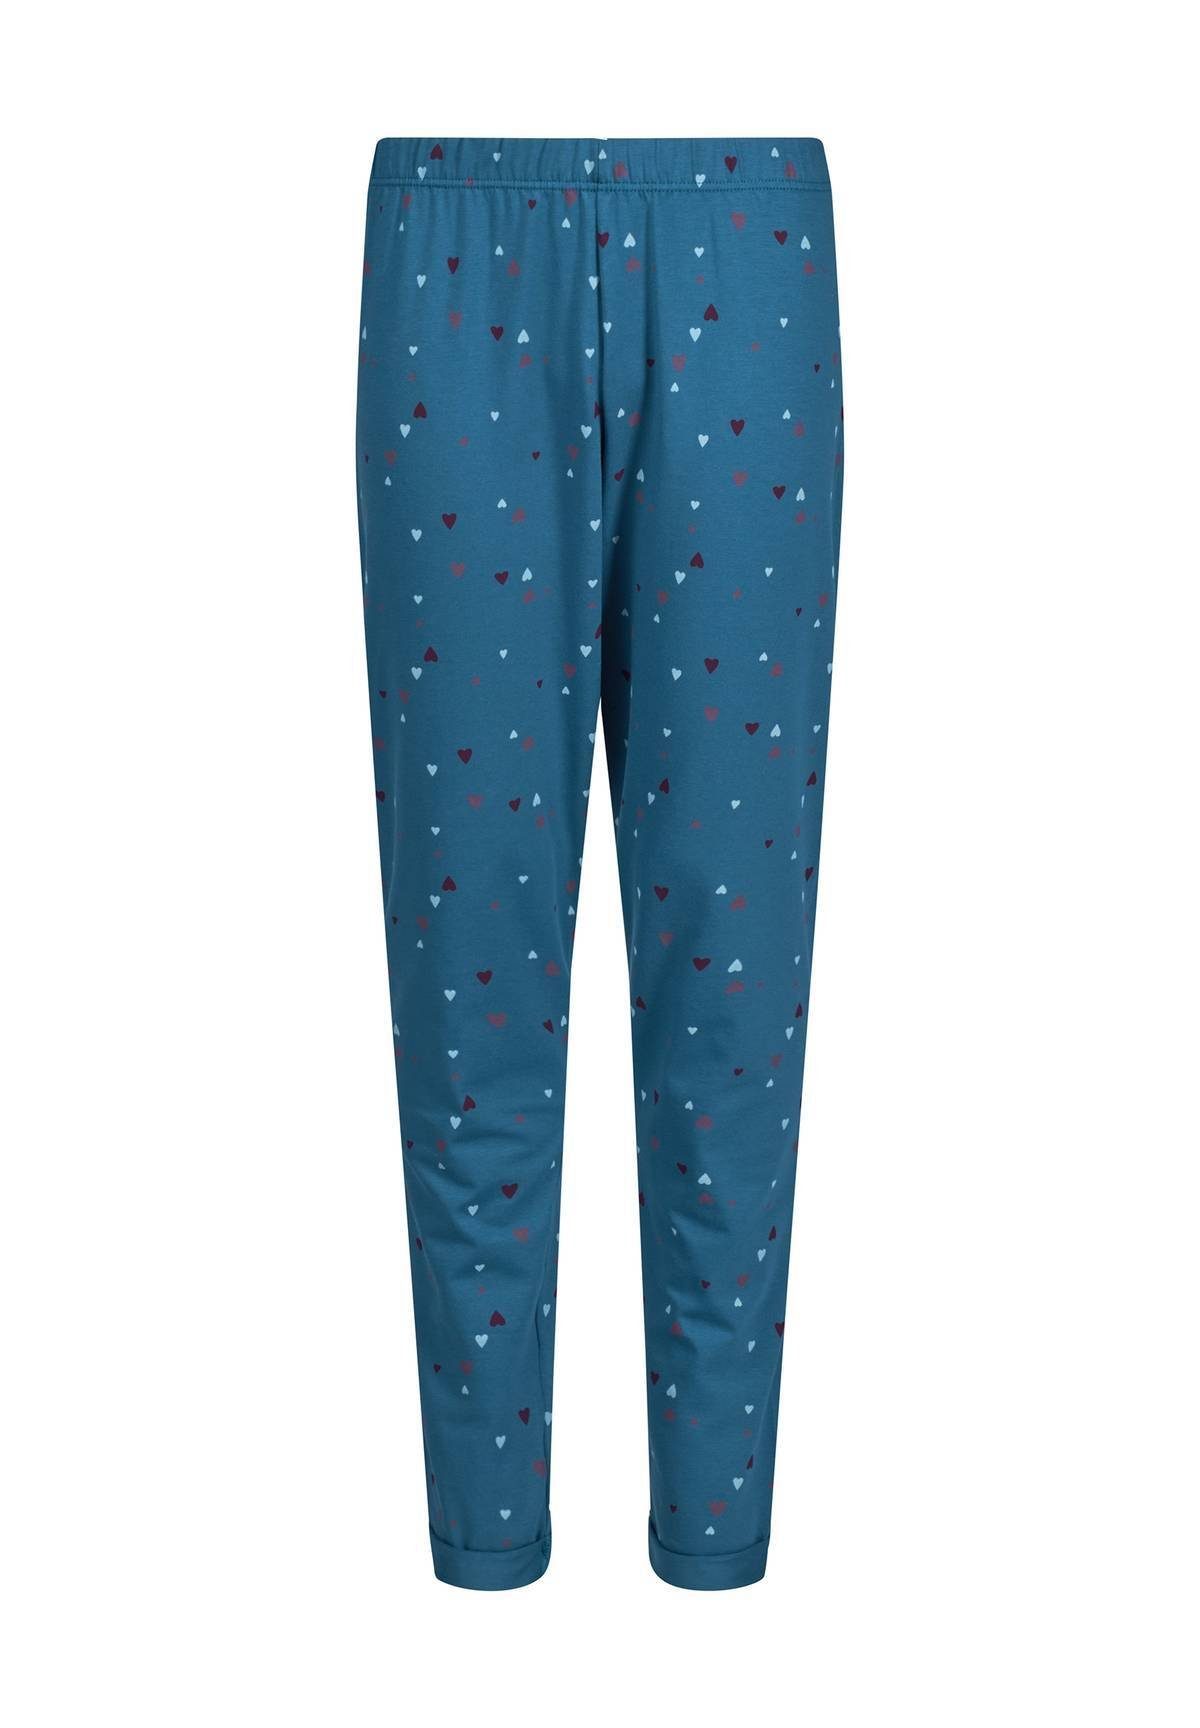 Set Skiny 2-tlg. Schlafanzug Pyjama Mädchen - lang, Kinder, Pink/Blau